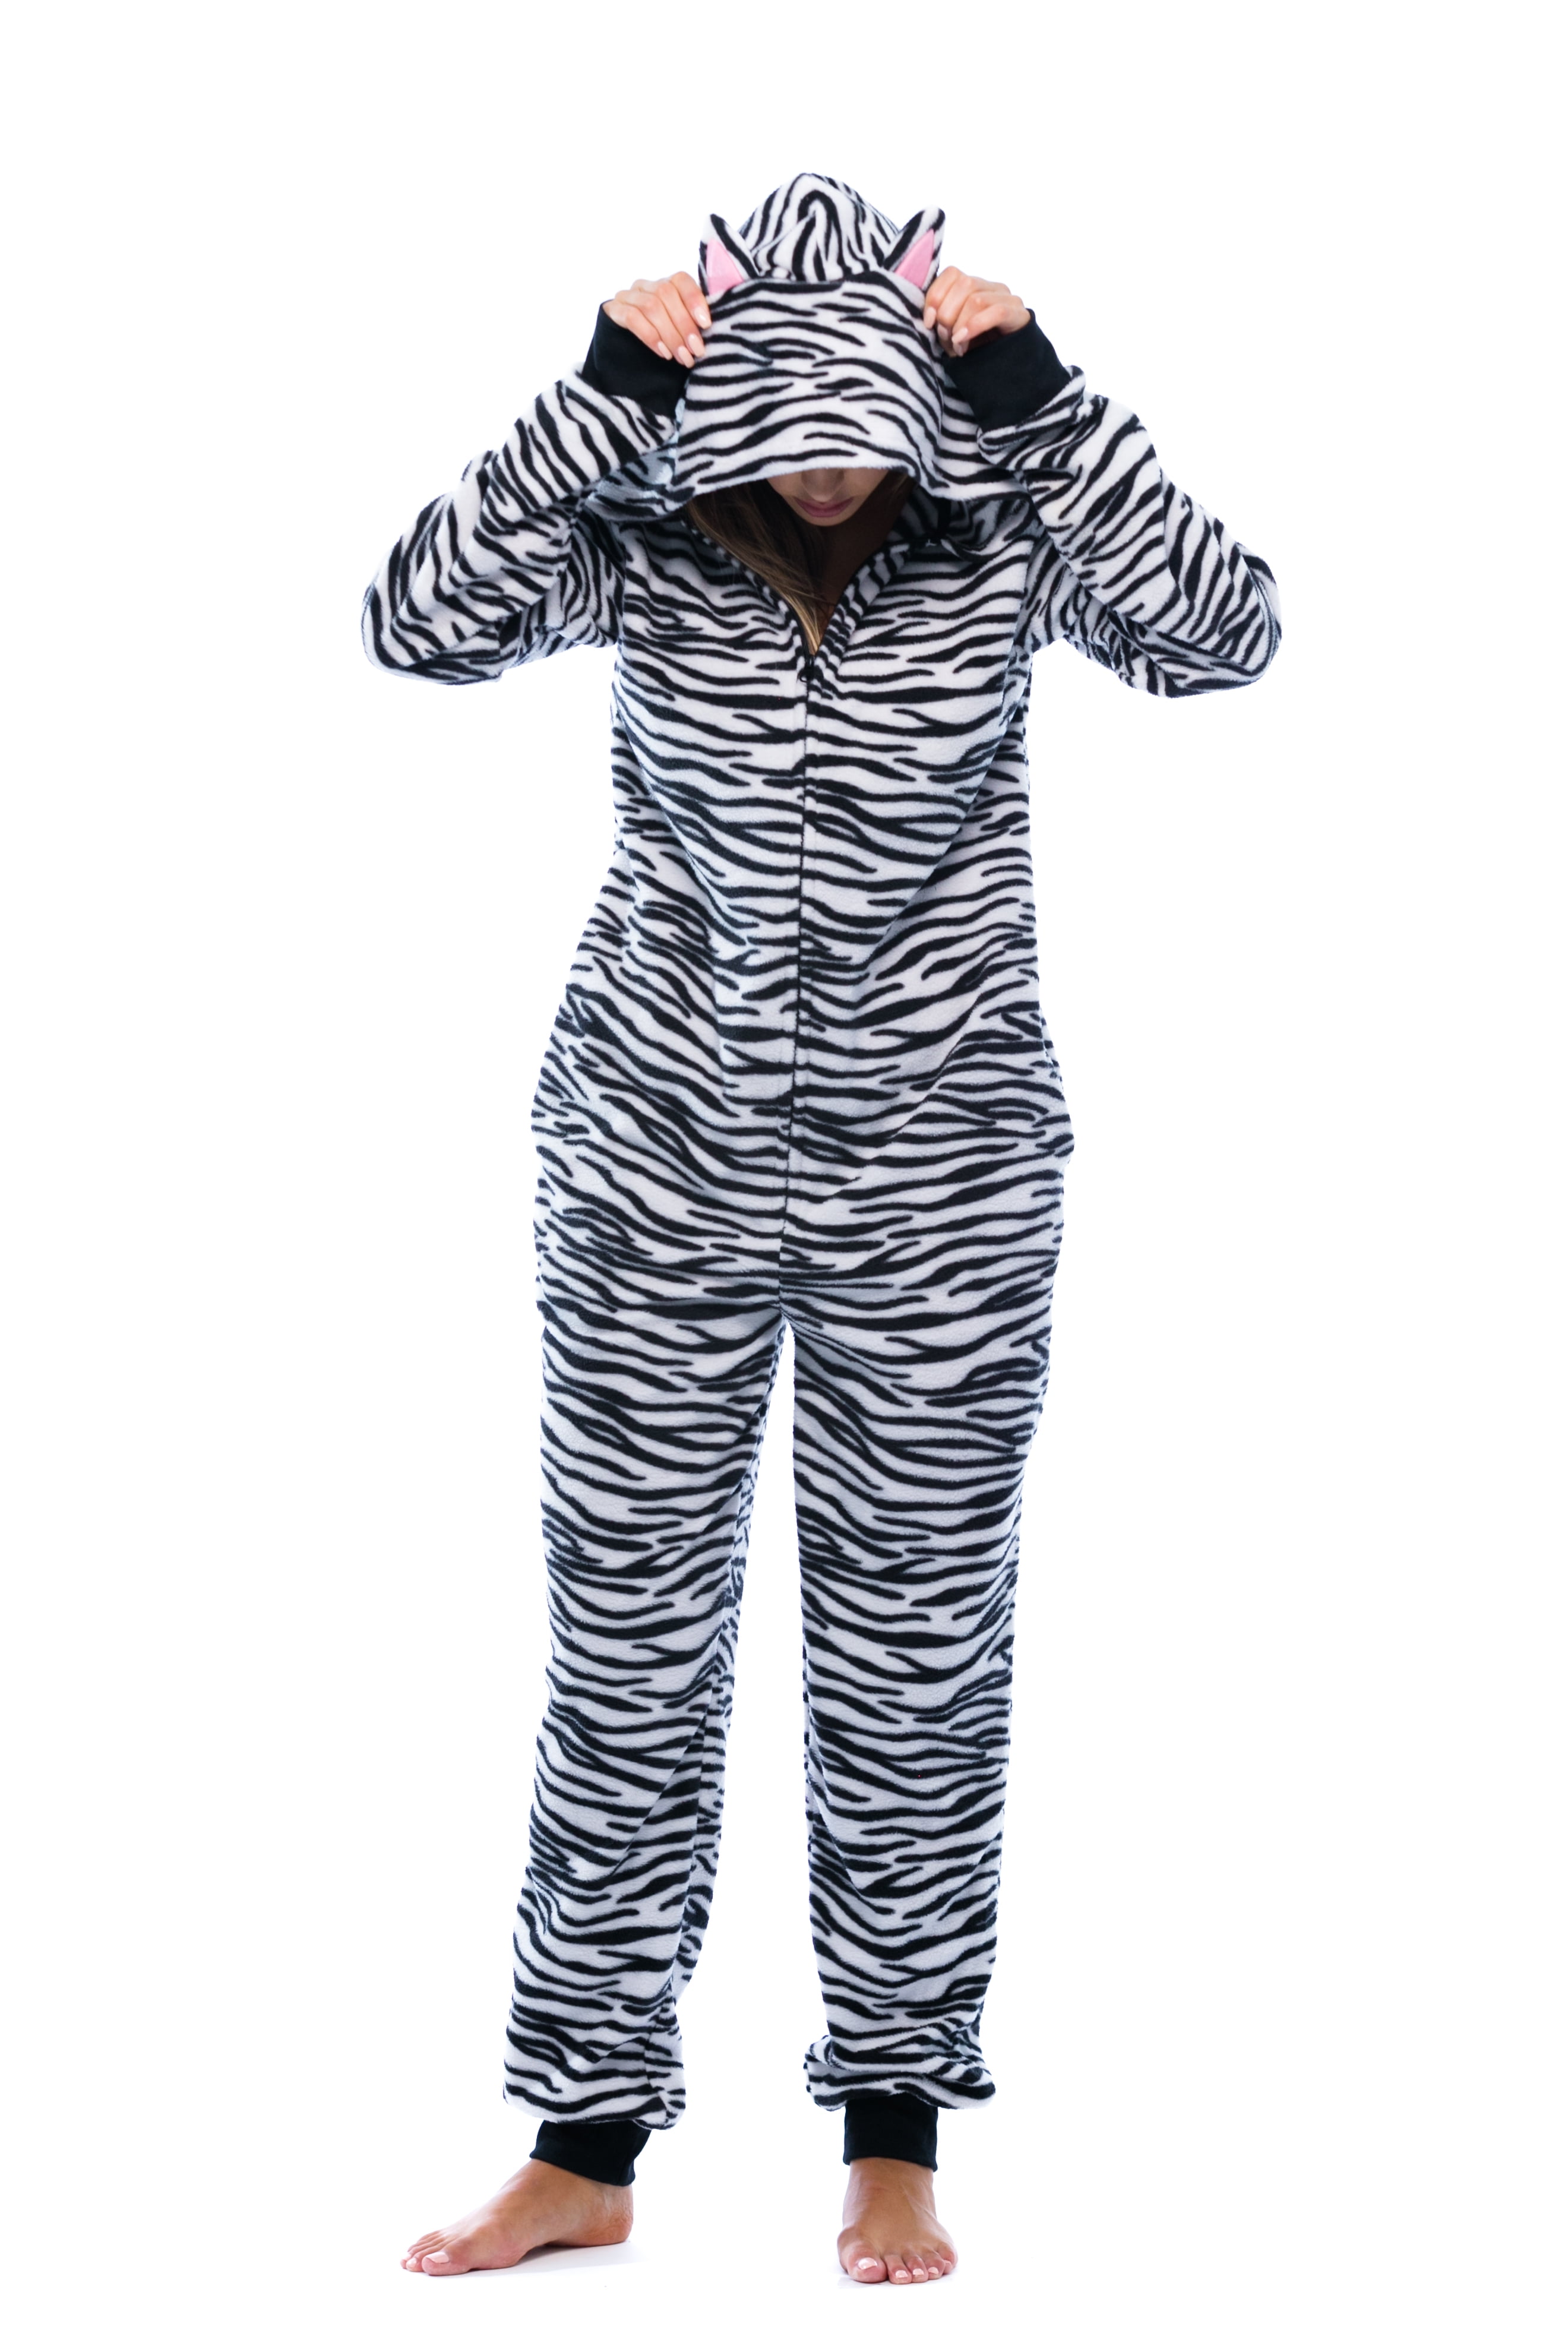 Just Love Adult Onesie with Animal Prints / Pajamas (White Tiger, Large)